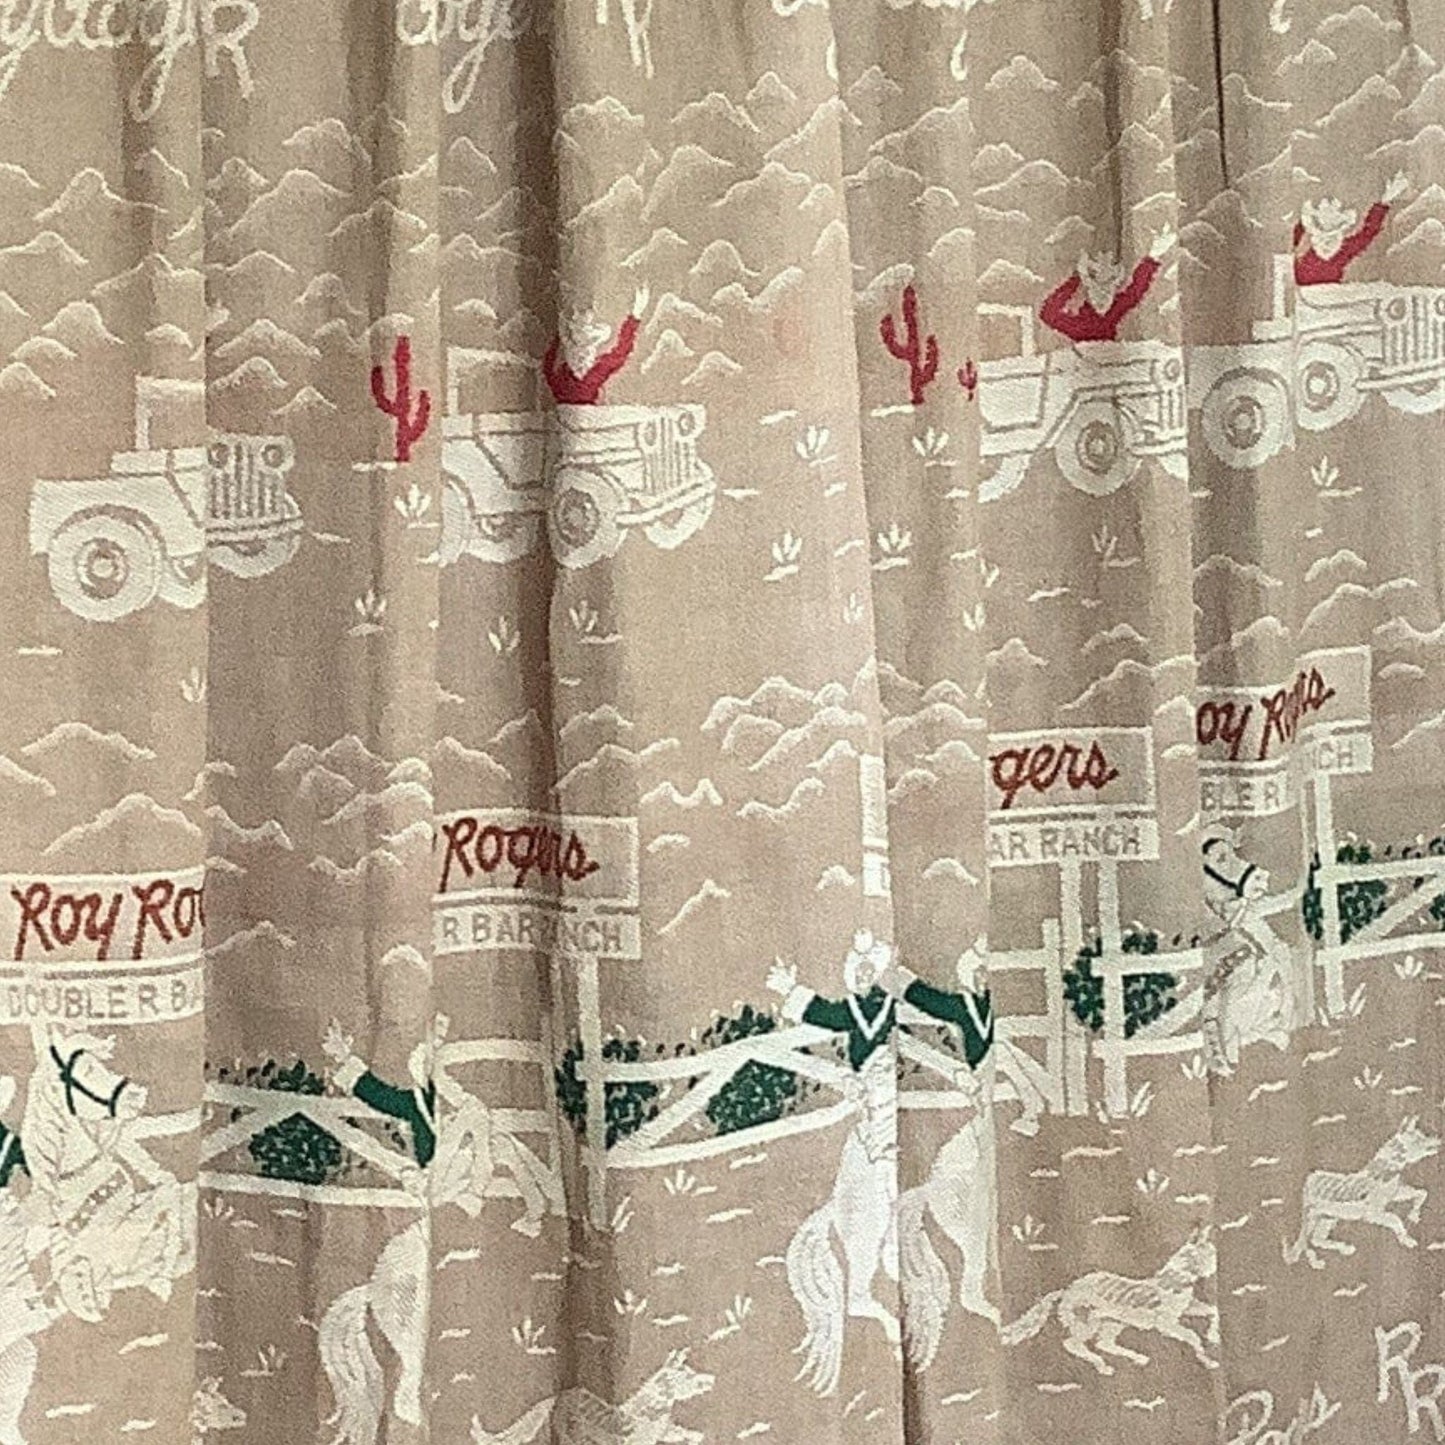 Vintage Roy Rogers Curtains Multi / Cotton / Vintage 1950s